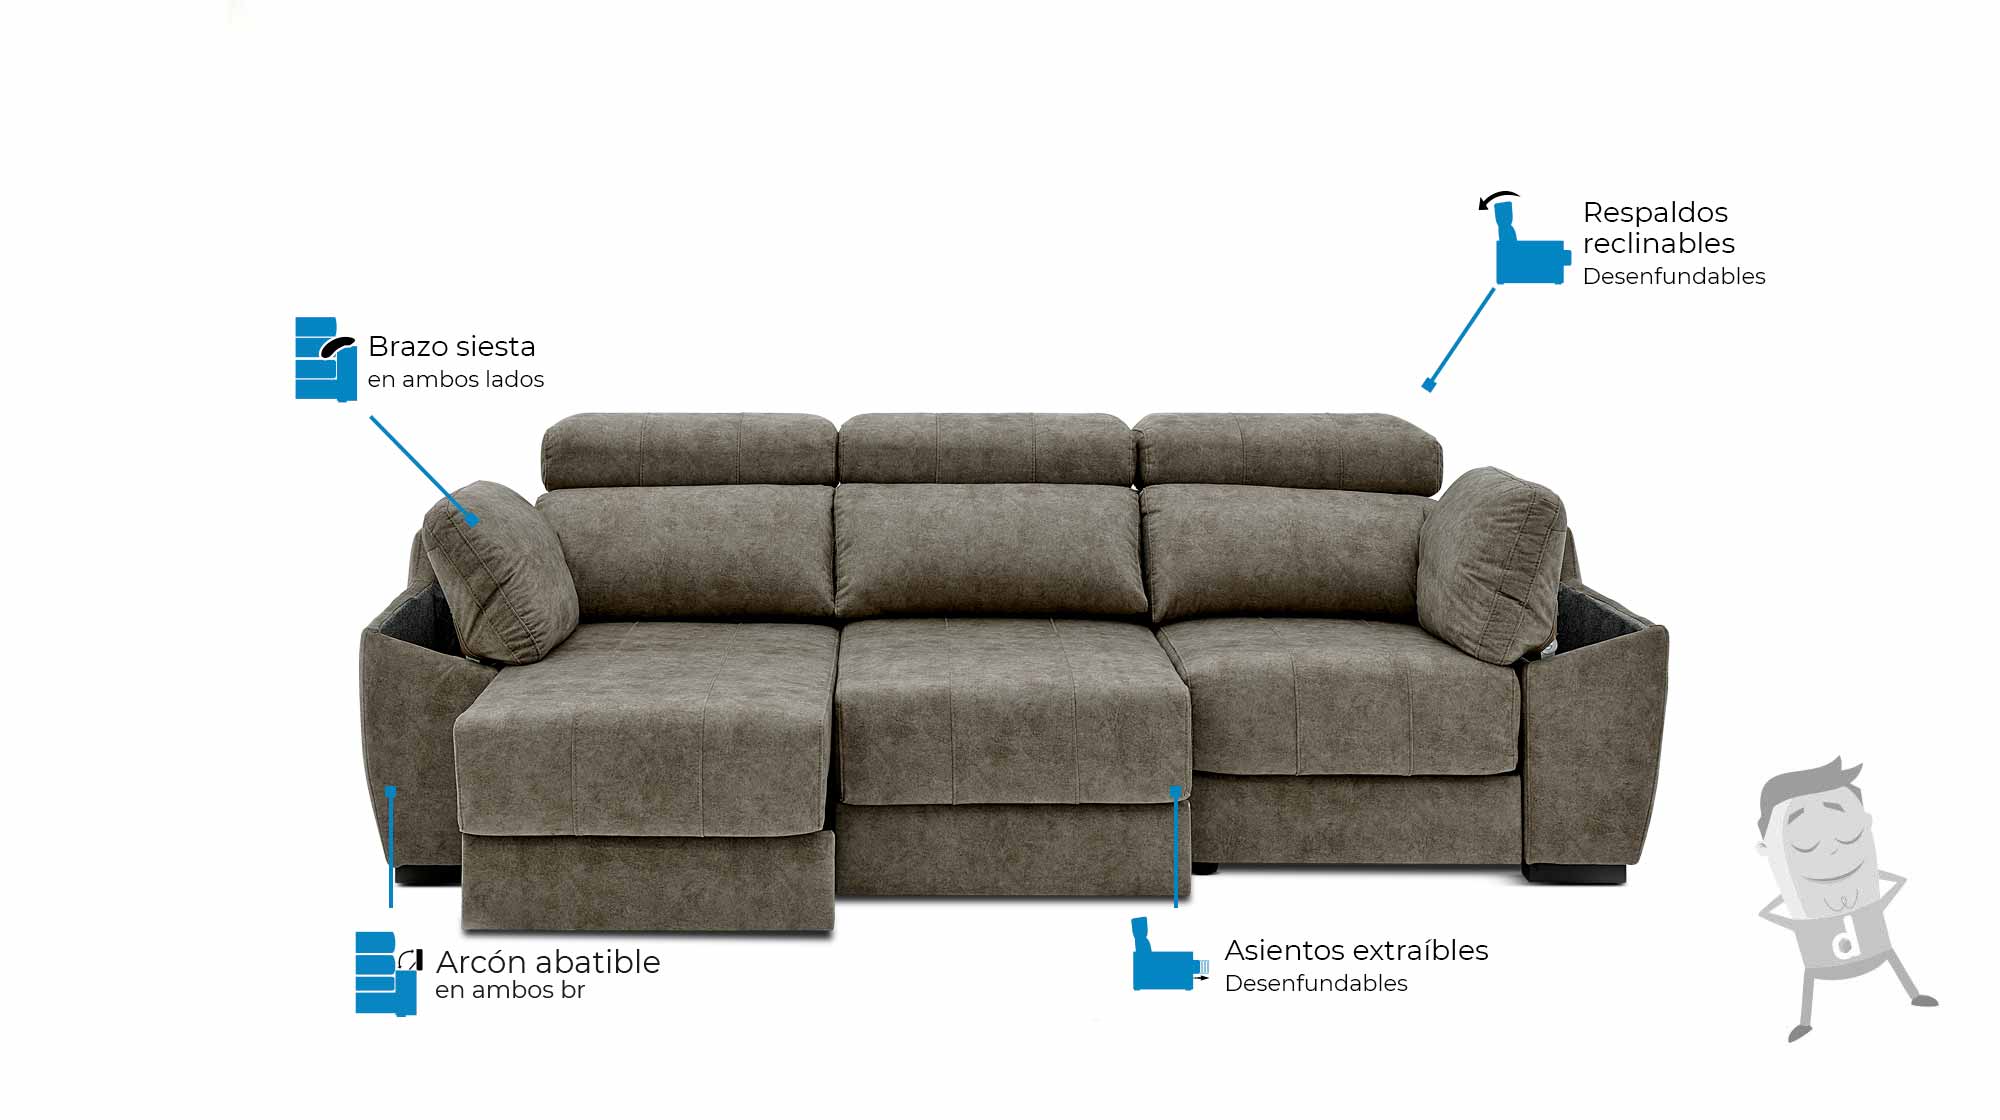 Sofa cama valeria caracteristicas